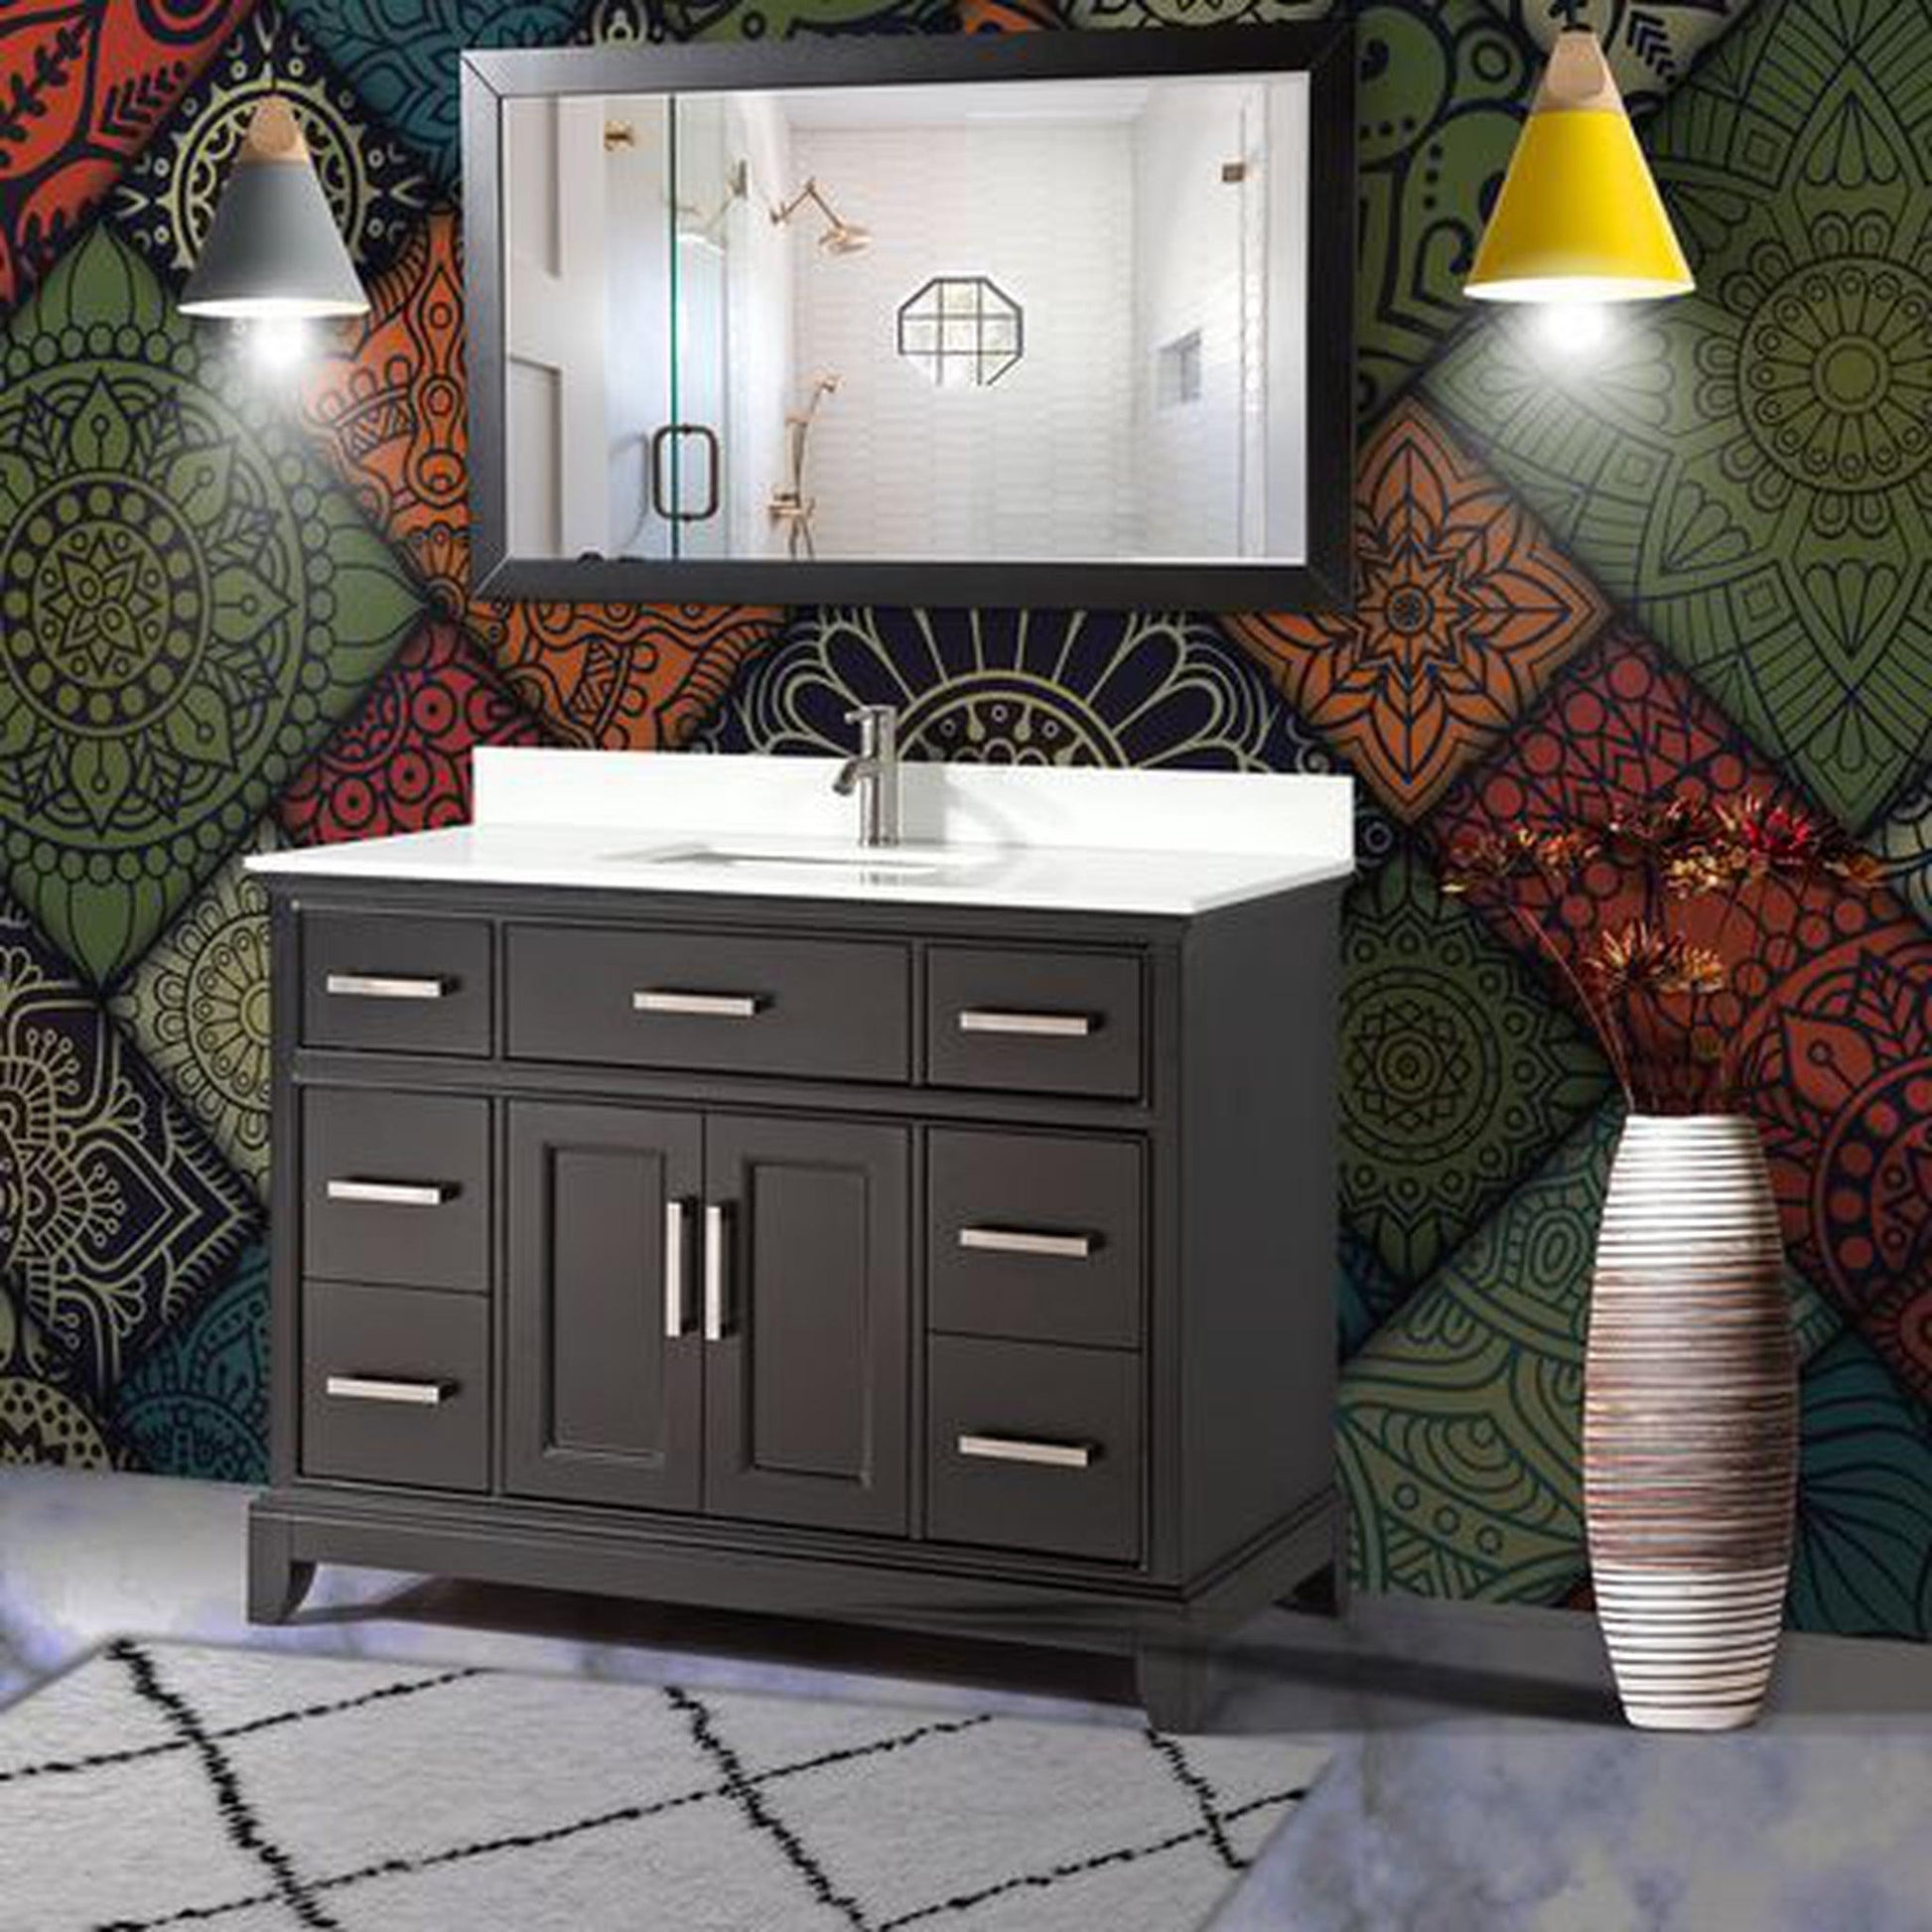 Vanity Art Savona 48" Single Espresso Freestanding Modern Bathroom Vanity Set With Carrara Marble Top, Undermount Ceramic Sink, 7 Dovetail Drawer Cabinet, Backsplash and Mirror